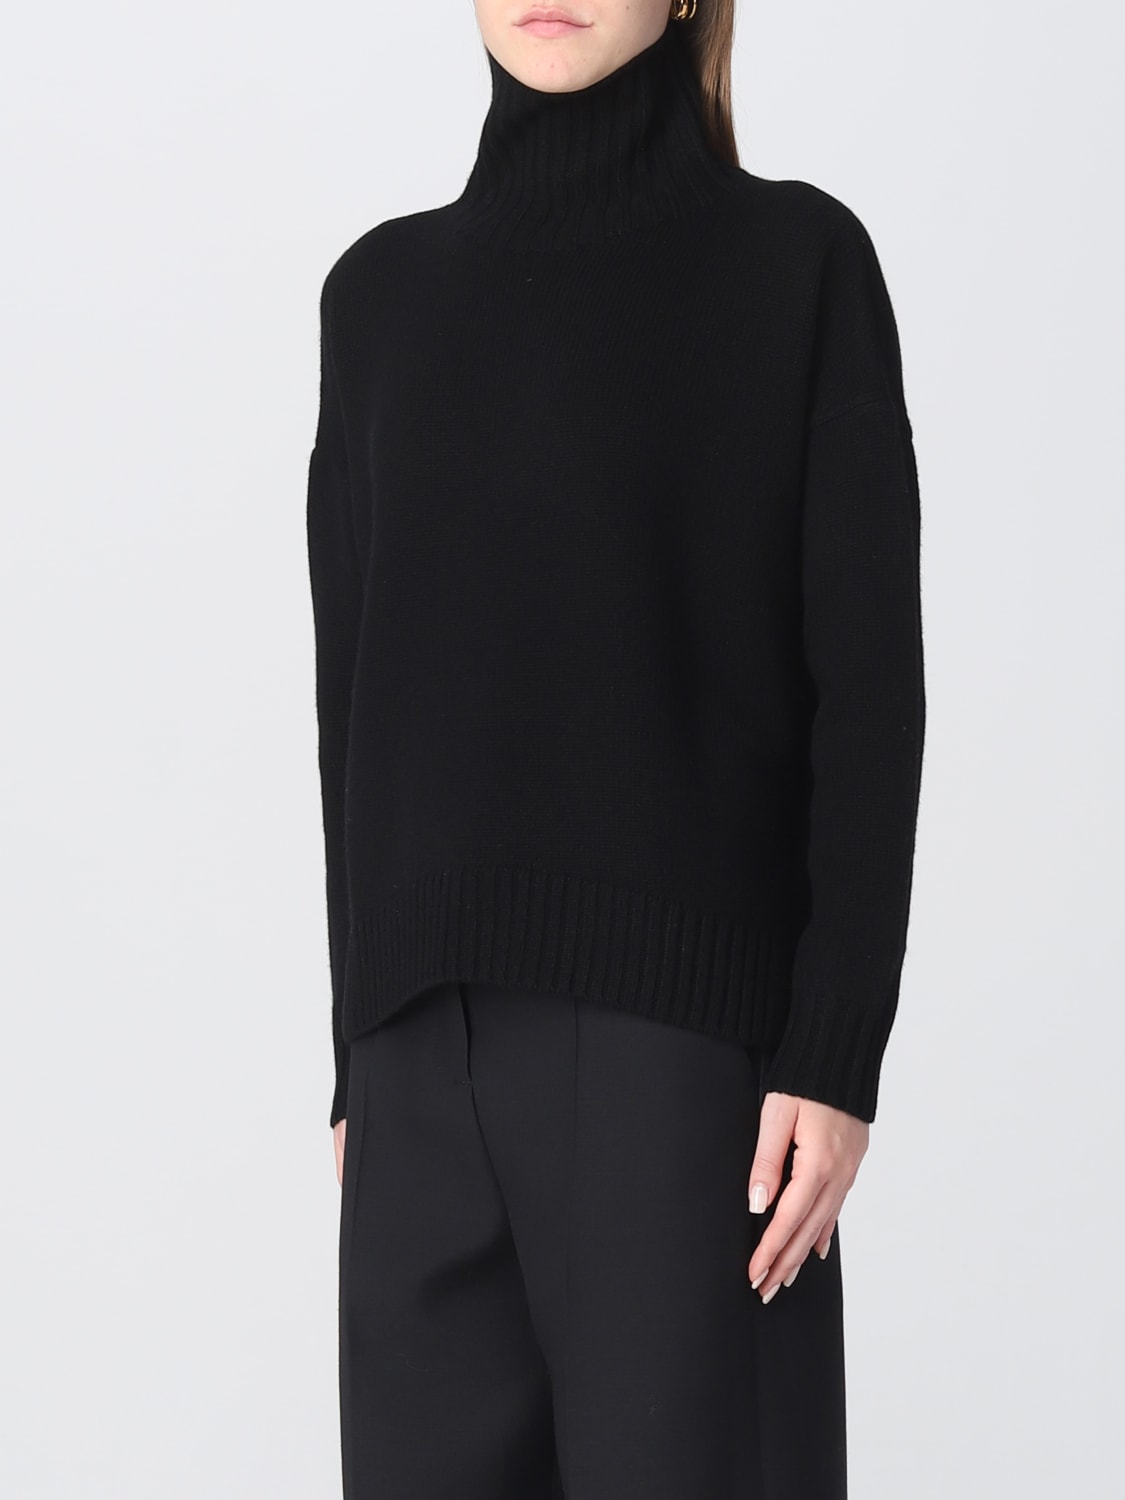 MAX MARA: sweater in wool and cashmere blend - Black | Max Mara sweater ...